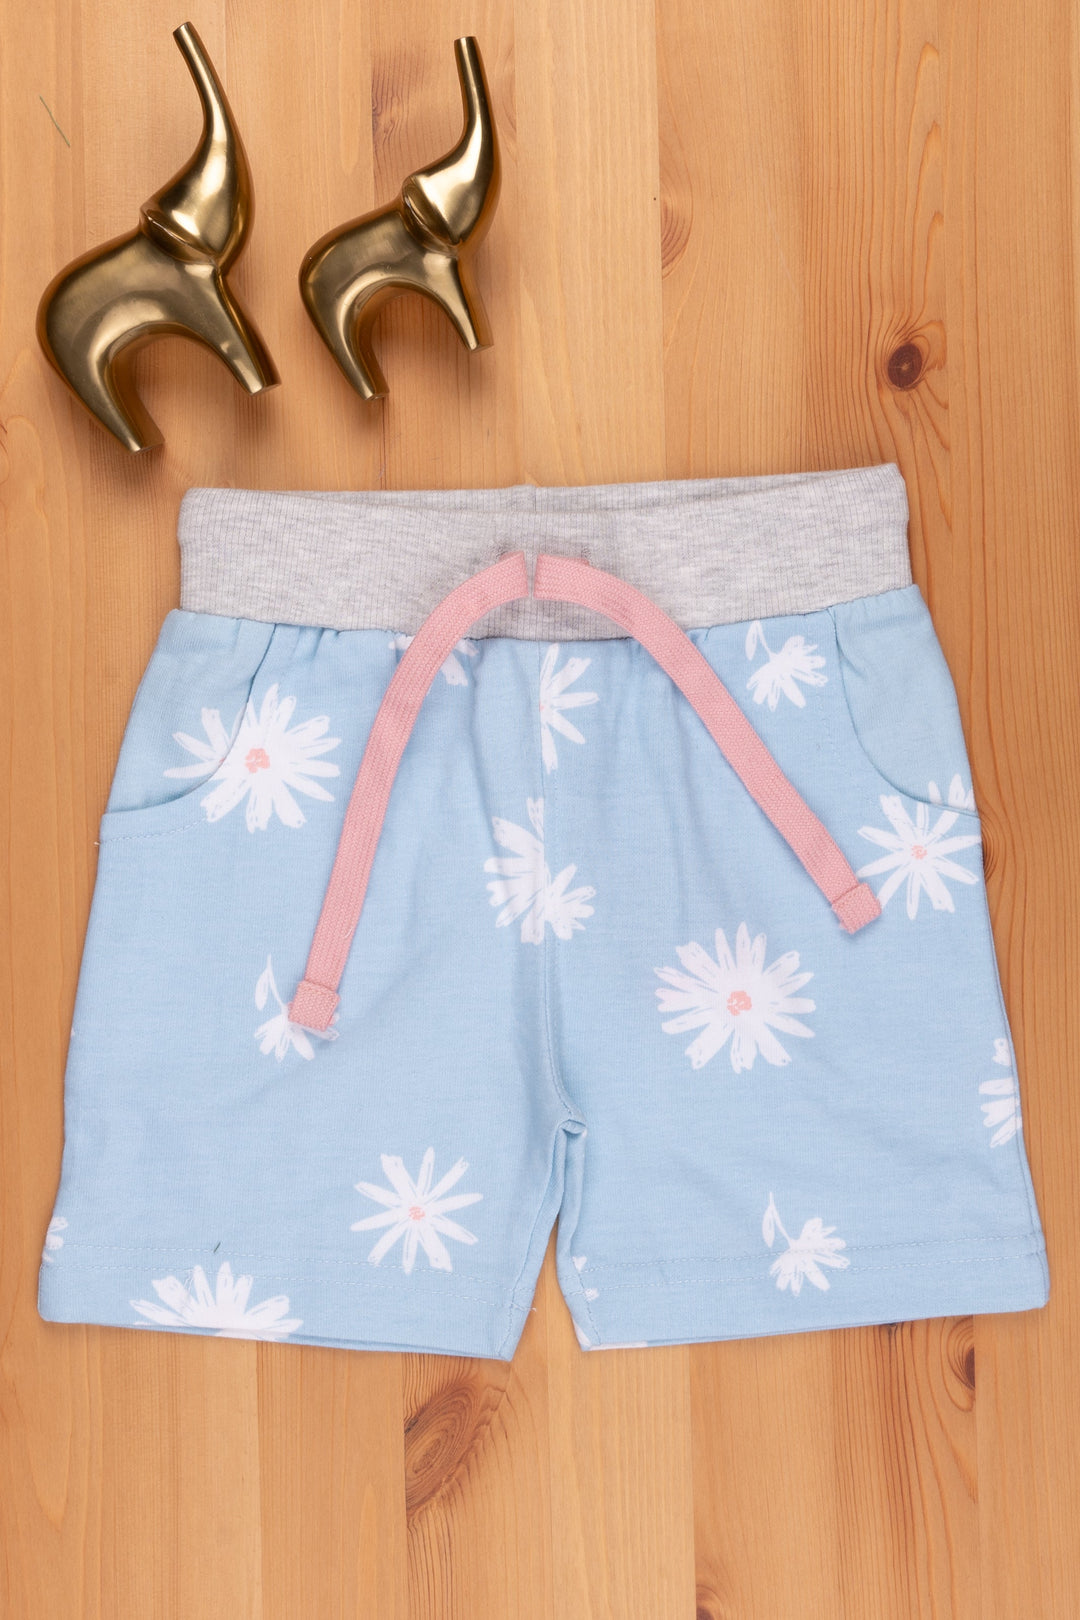 The Nesavu Girls Shorts Trendy Unisex Kids Summer Shorts Cool and Stylish Casual Wear psr silks Nesavu 18 (2Y) / Blue LBW037